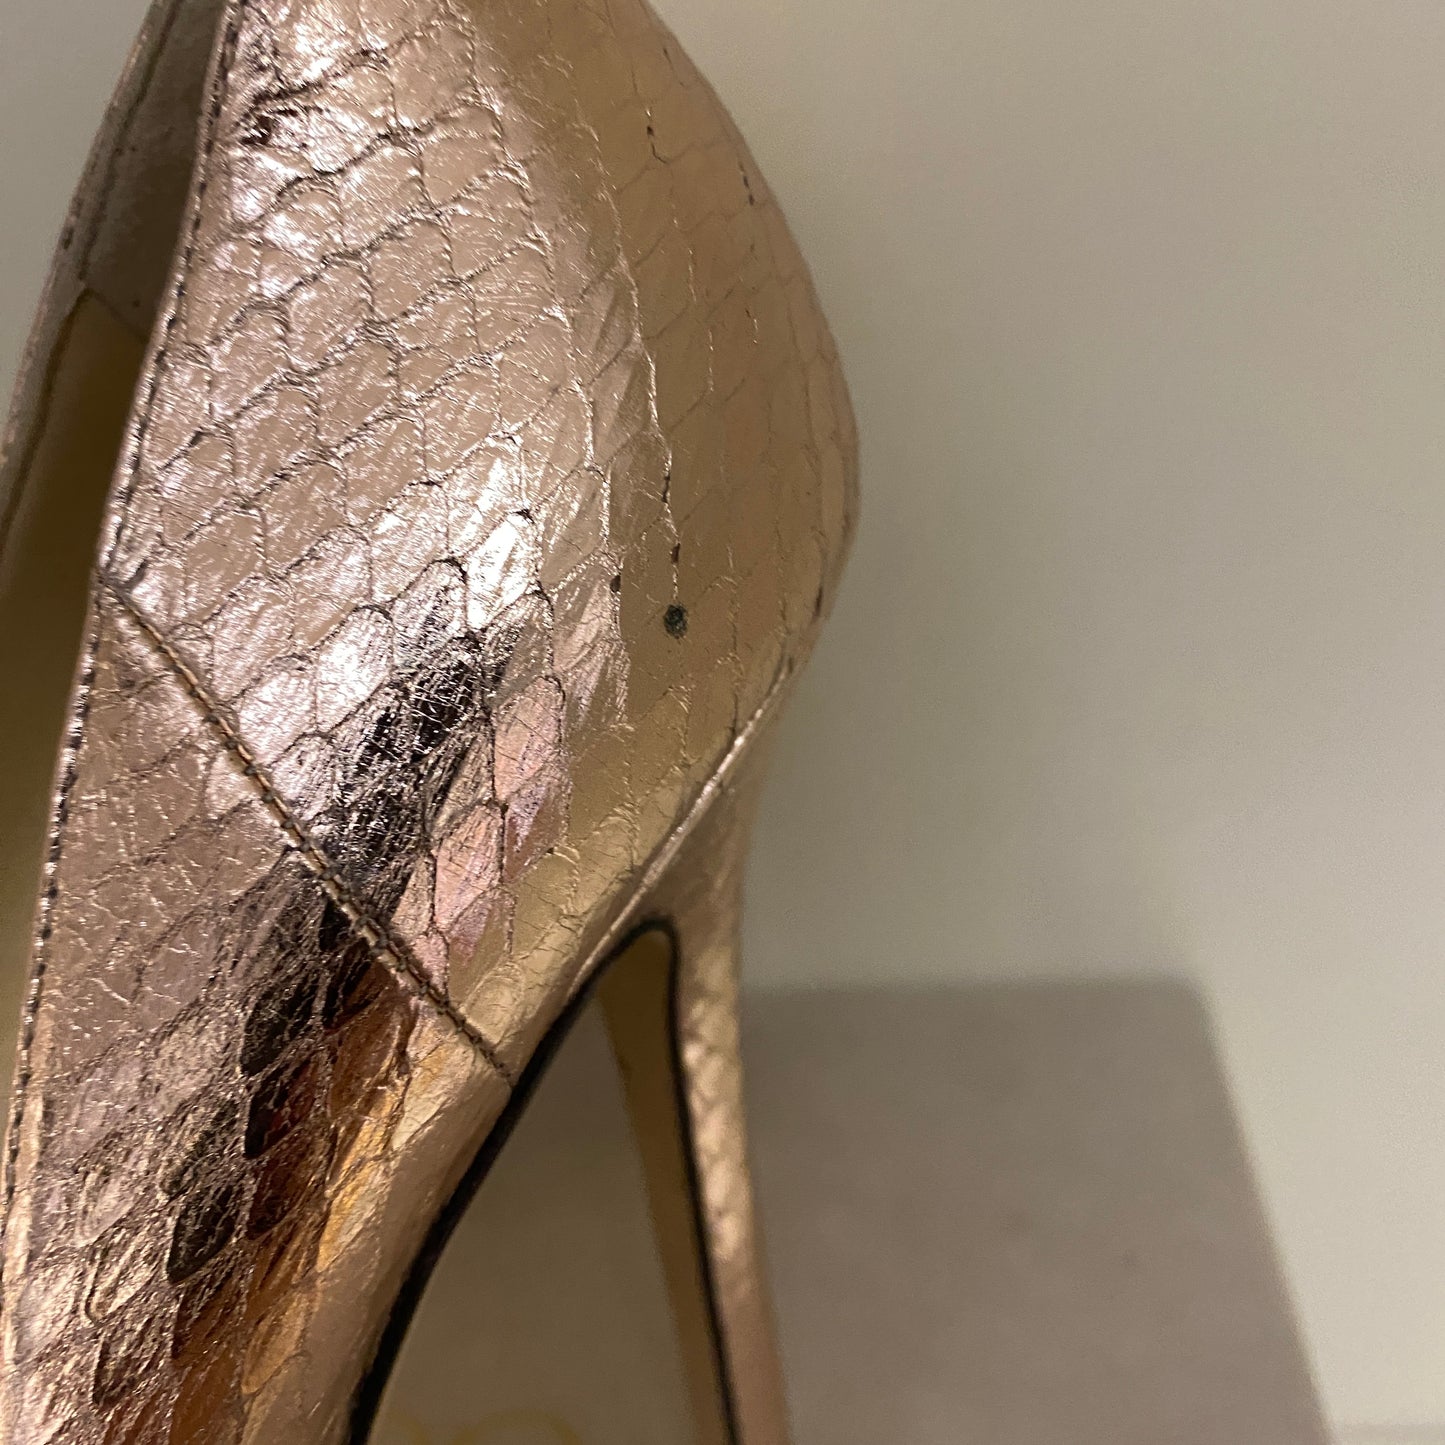 Jimmy choo gold snakeskin leather heels. Size 37.5 U.K. 4.5